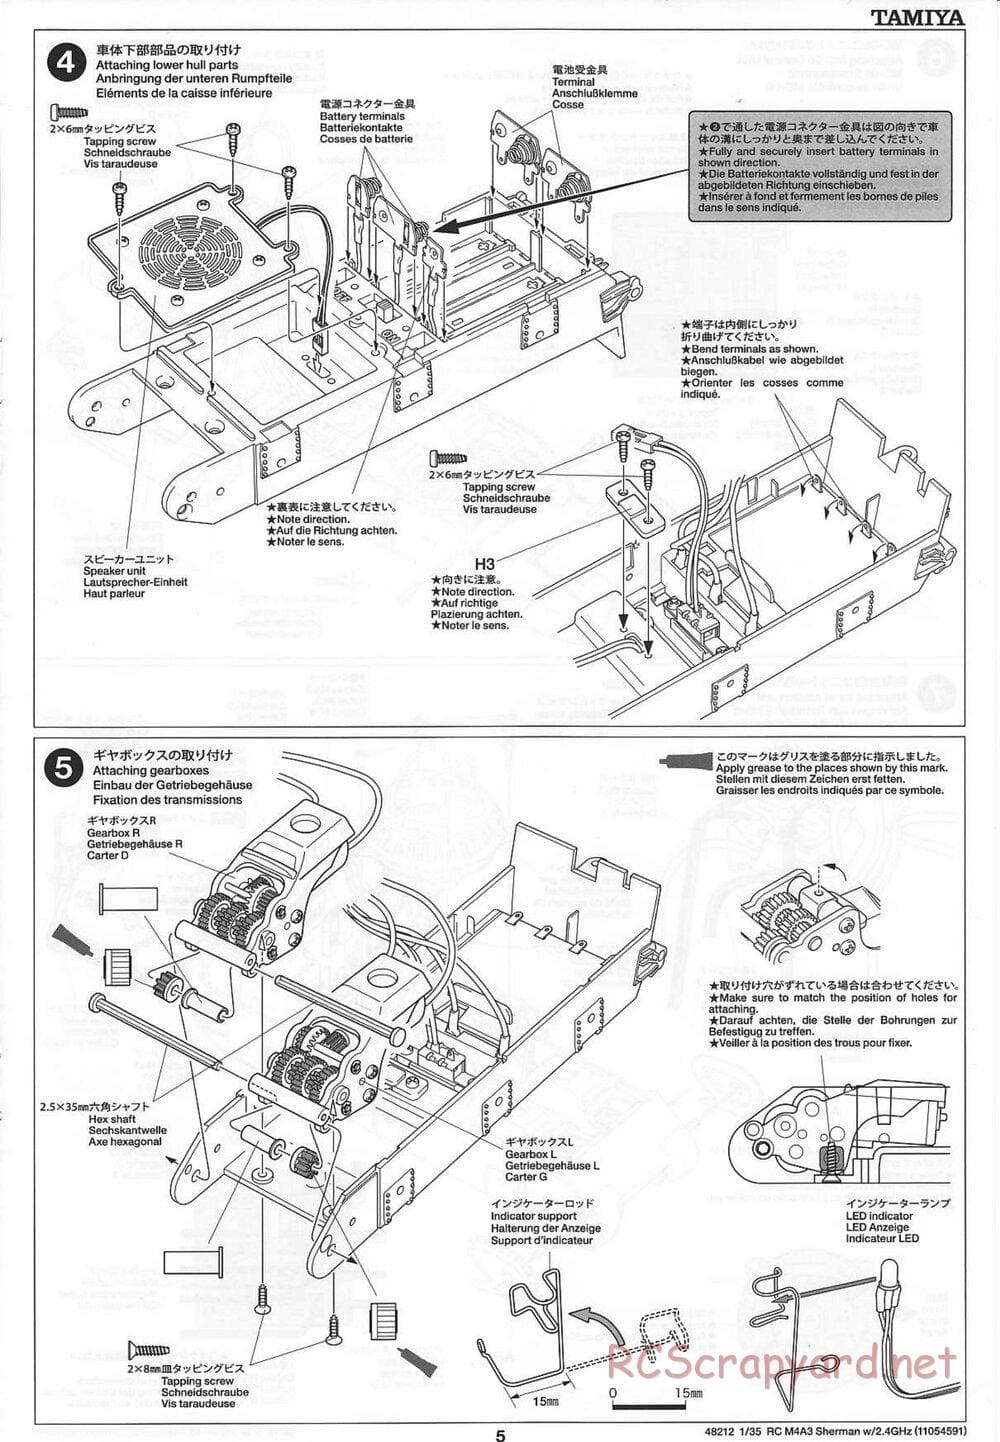 Tamiya - US Medium Tank M4A3 Sherman - 1/35 Scale Chassis - Manual - Page 5